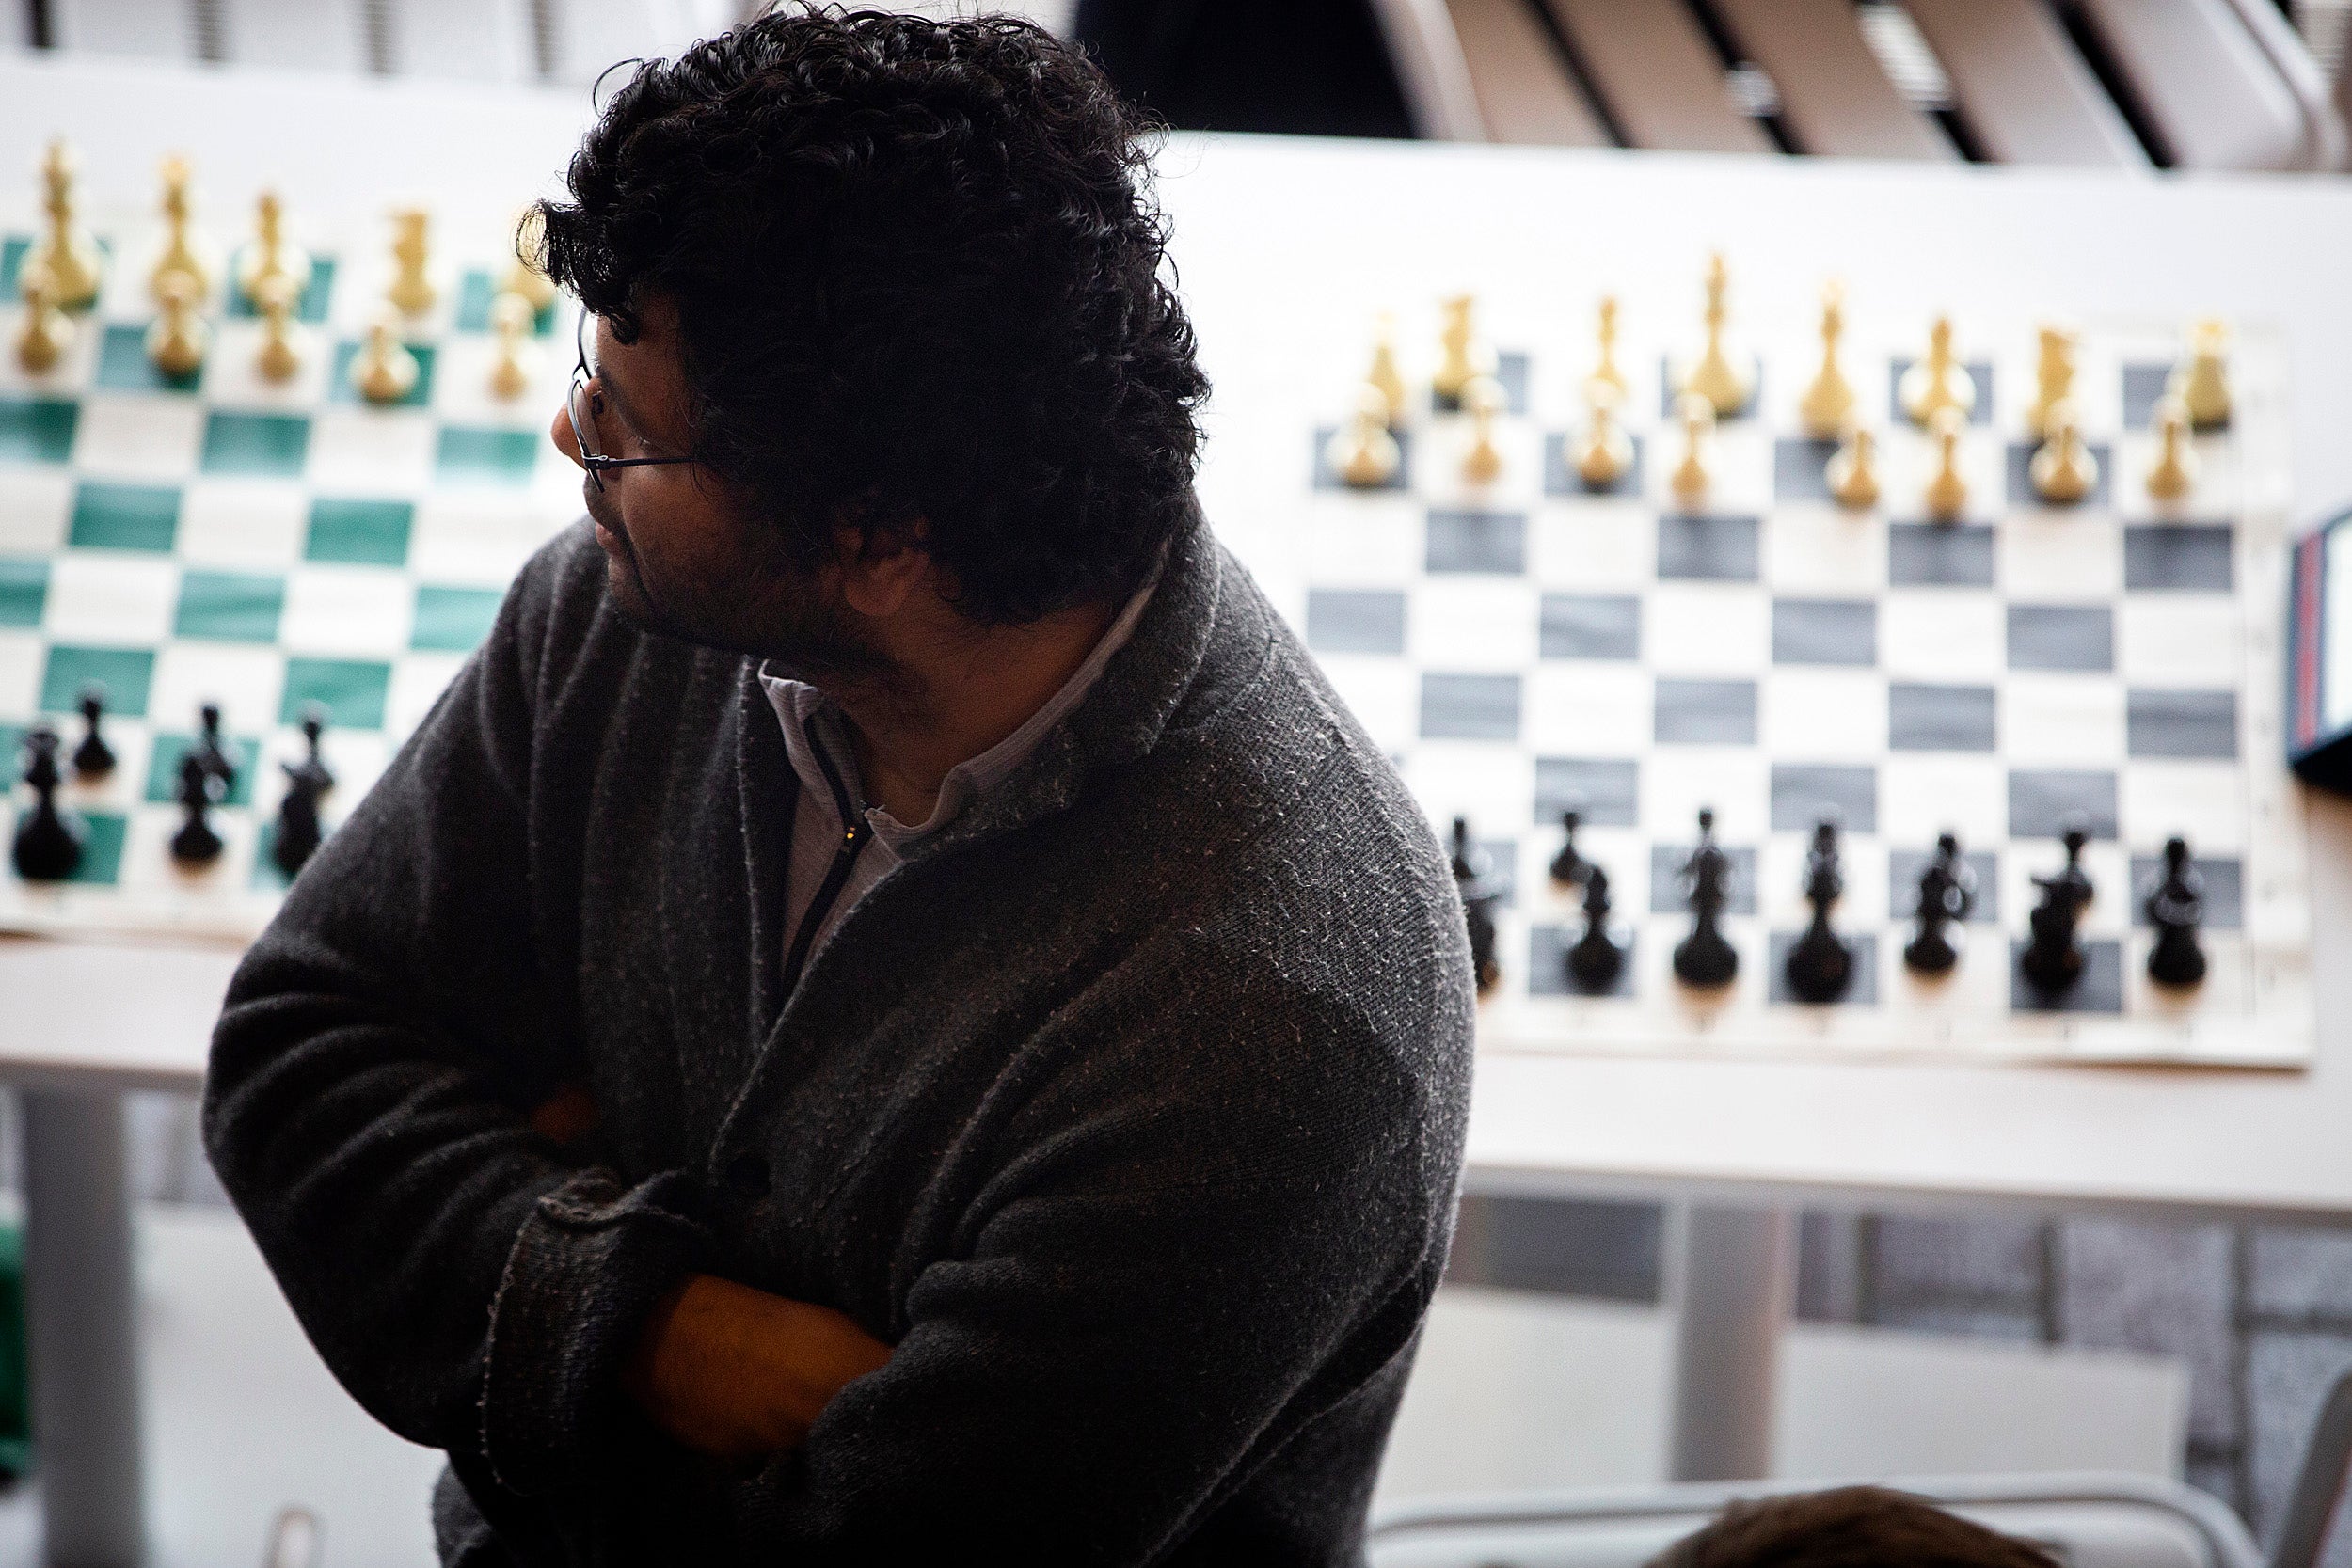 Natesh Pillai takes a break between chess matches.